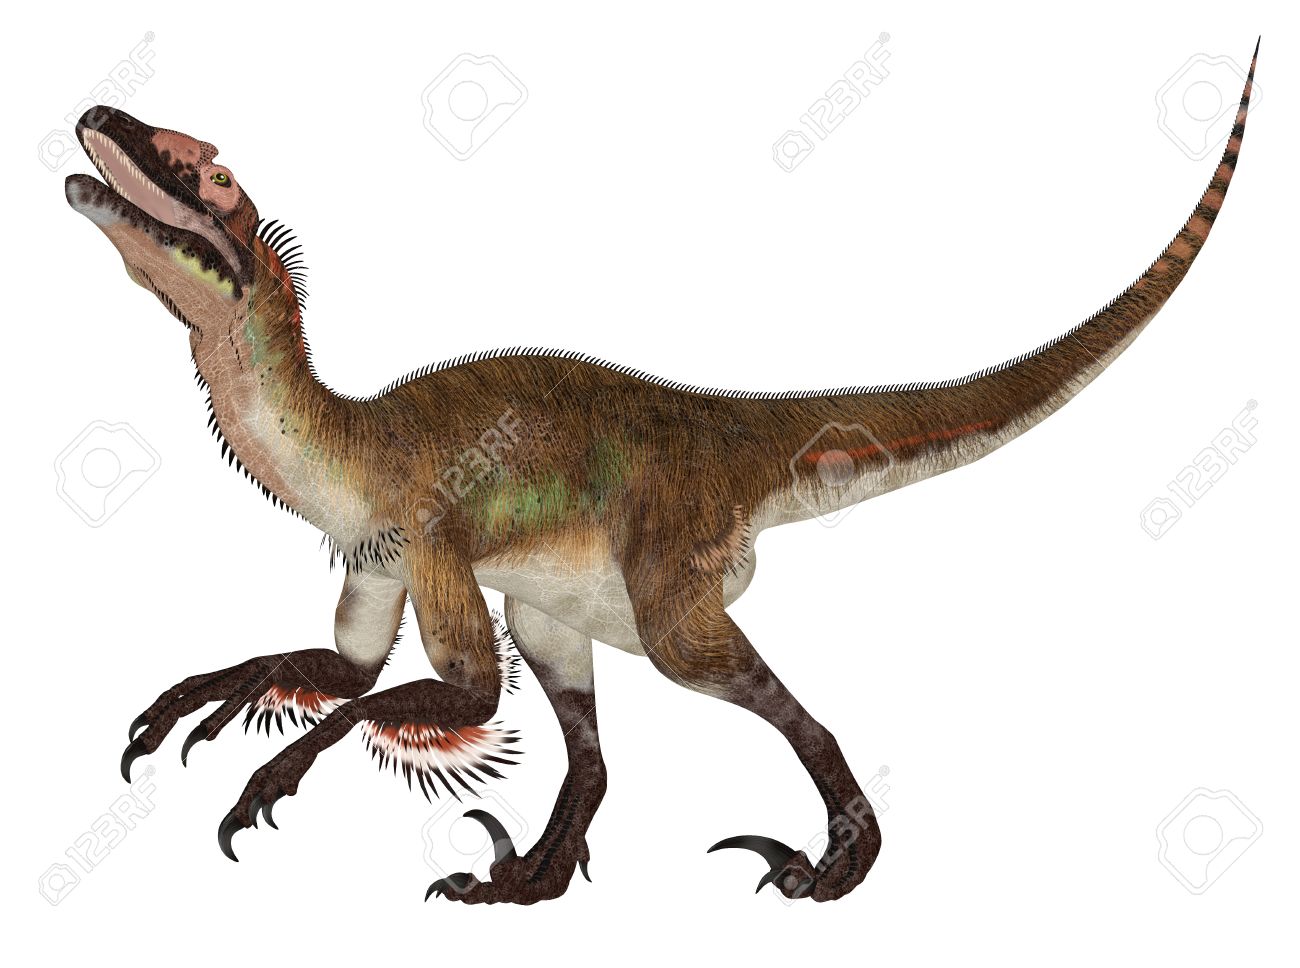 Illustration Of An Utahraptor Dinosaur Species Isolated On Stock